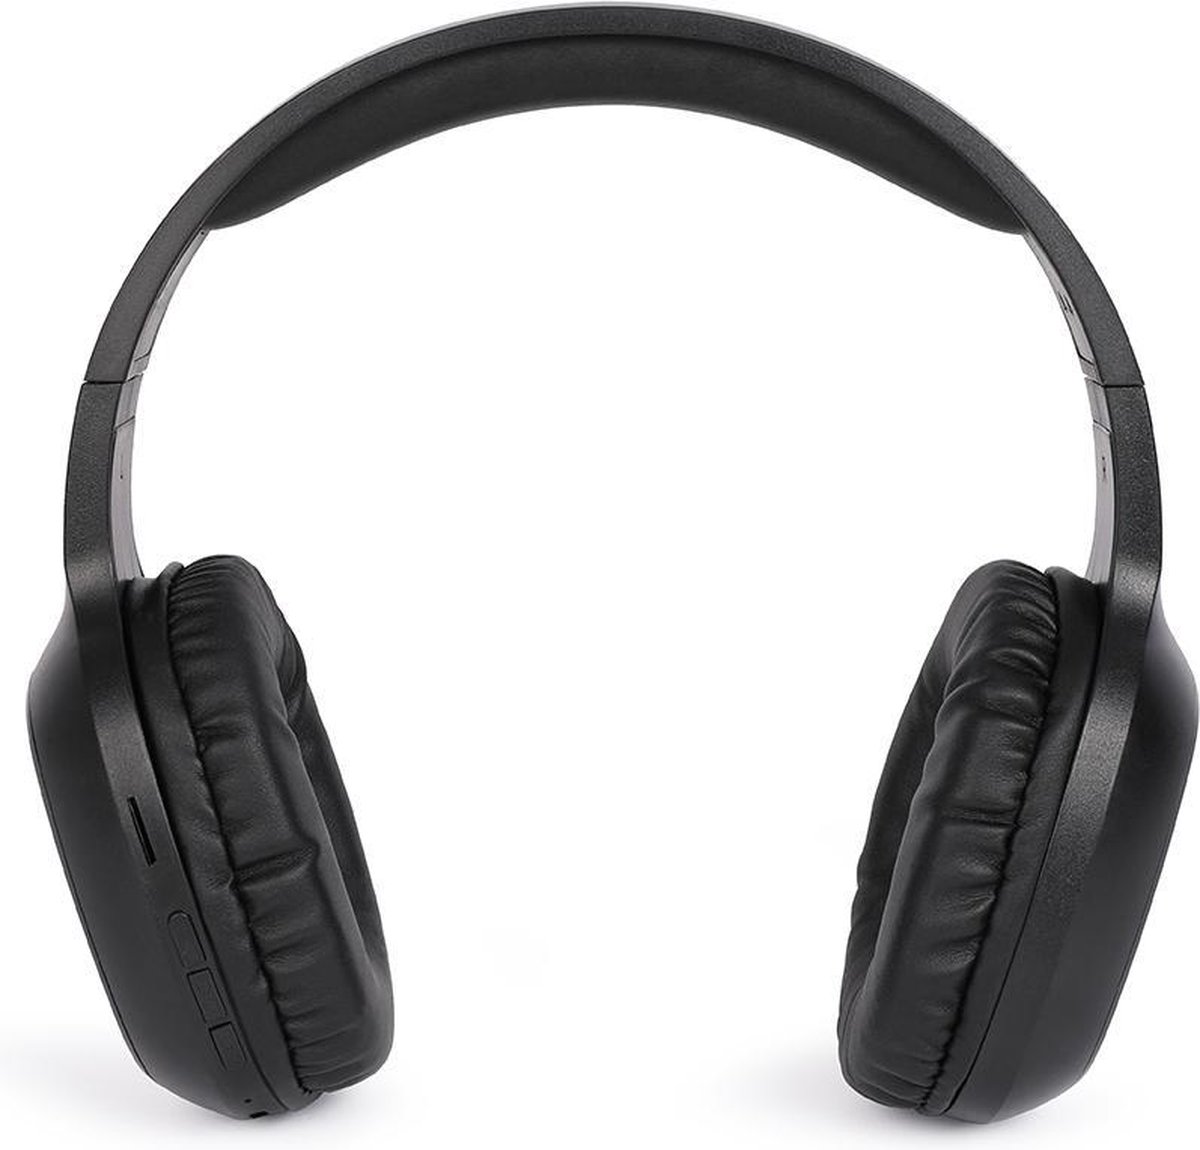 Livoo Bluetooth®-compatibele hoofdtelefoon - TES238